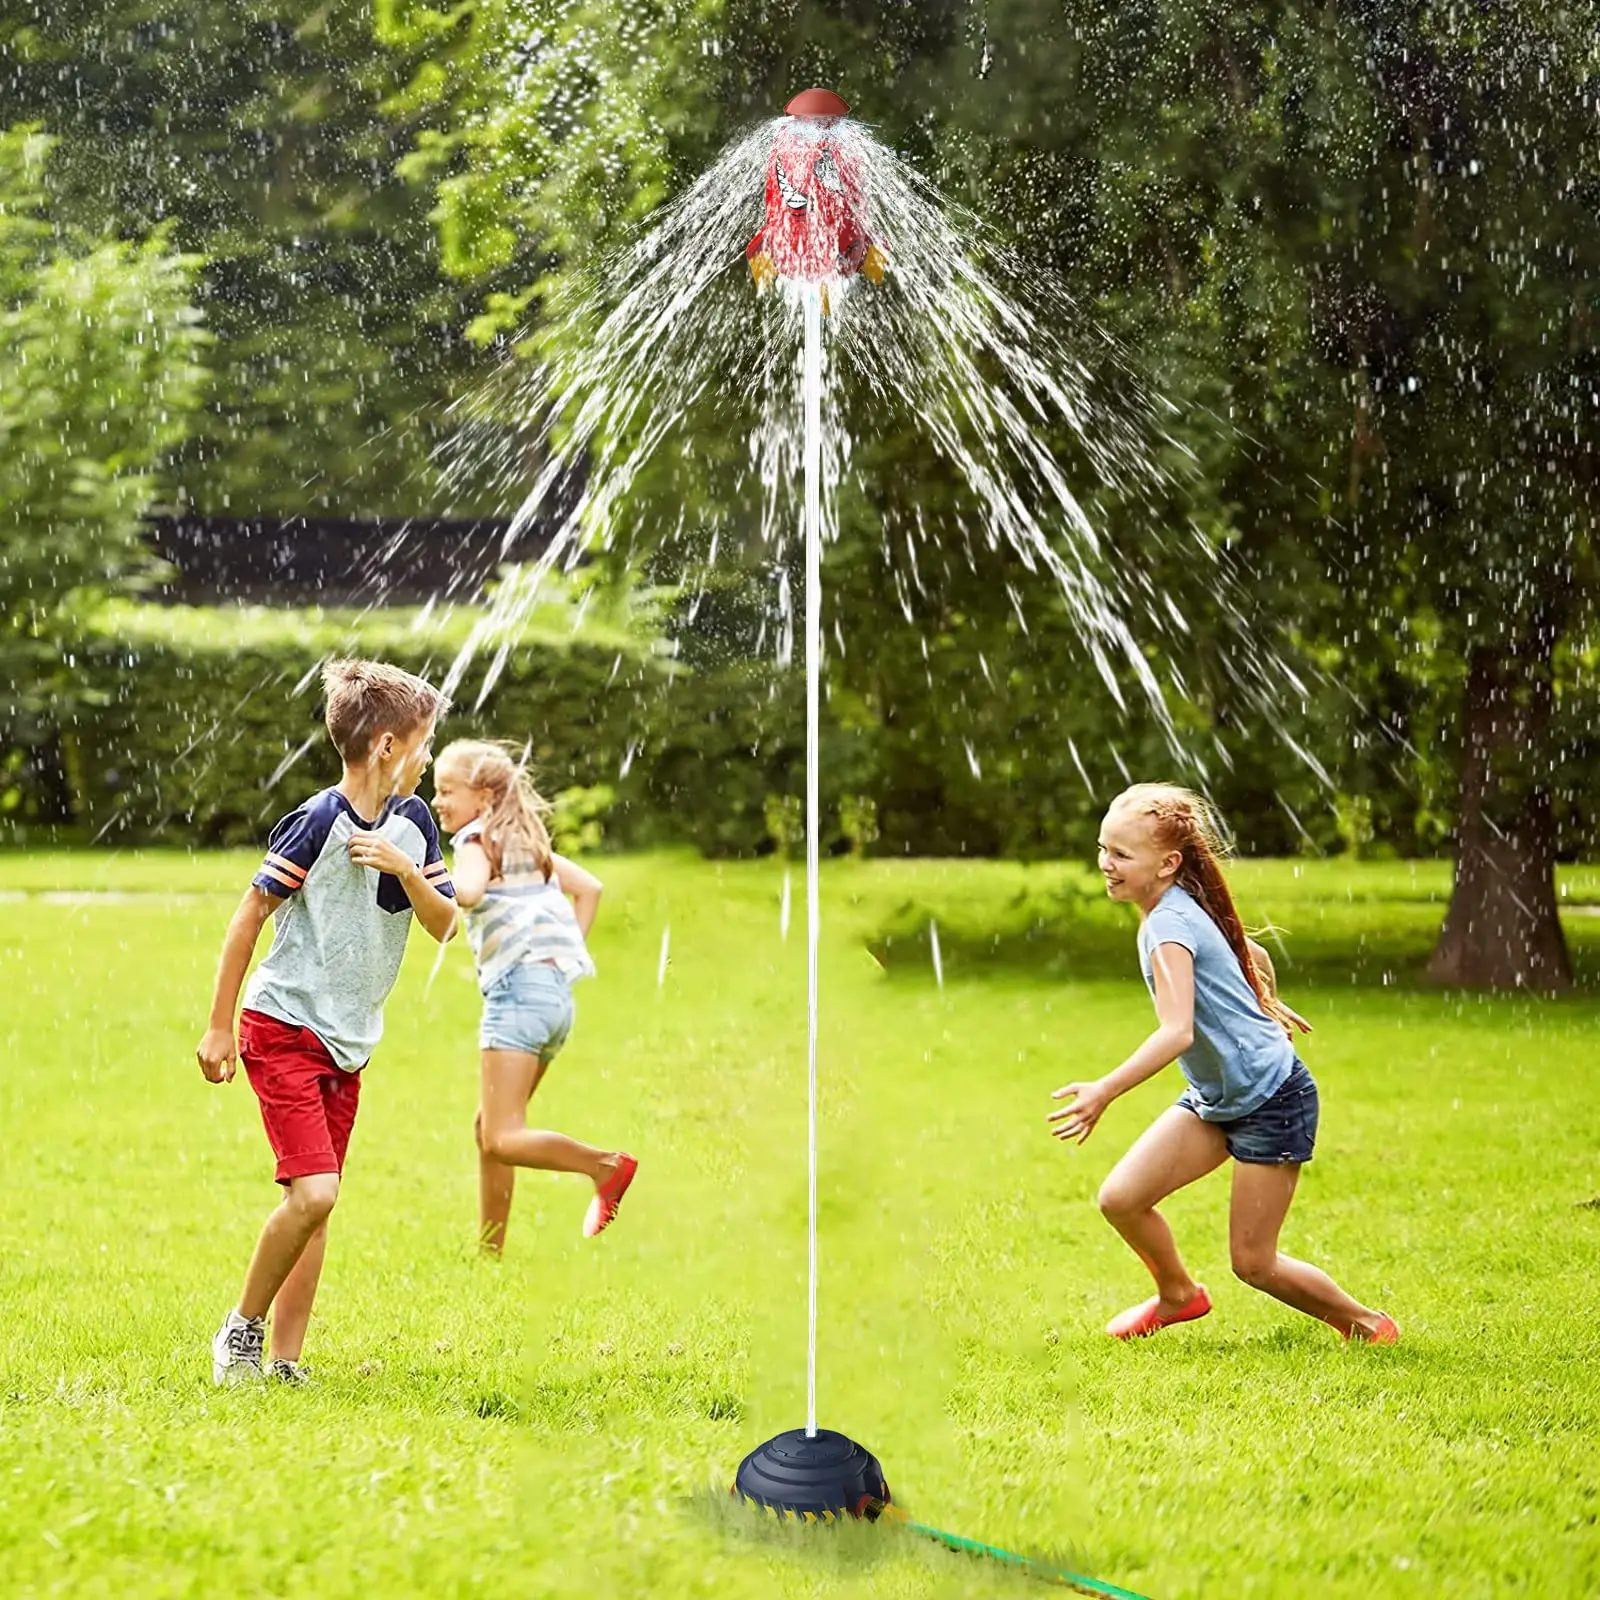 

Rocket Sprinkler Sprinkler Spinning Flying Children's Outdoor Water Playing Toy Fun Interaction In Garden Lawn Watering Toys